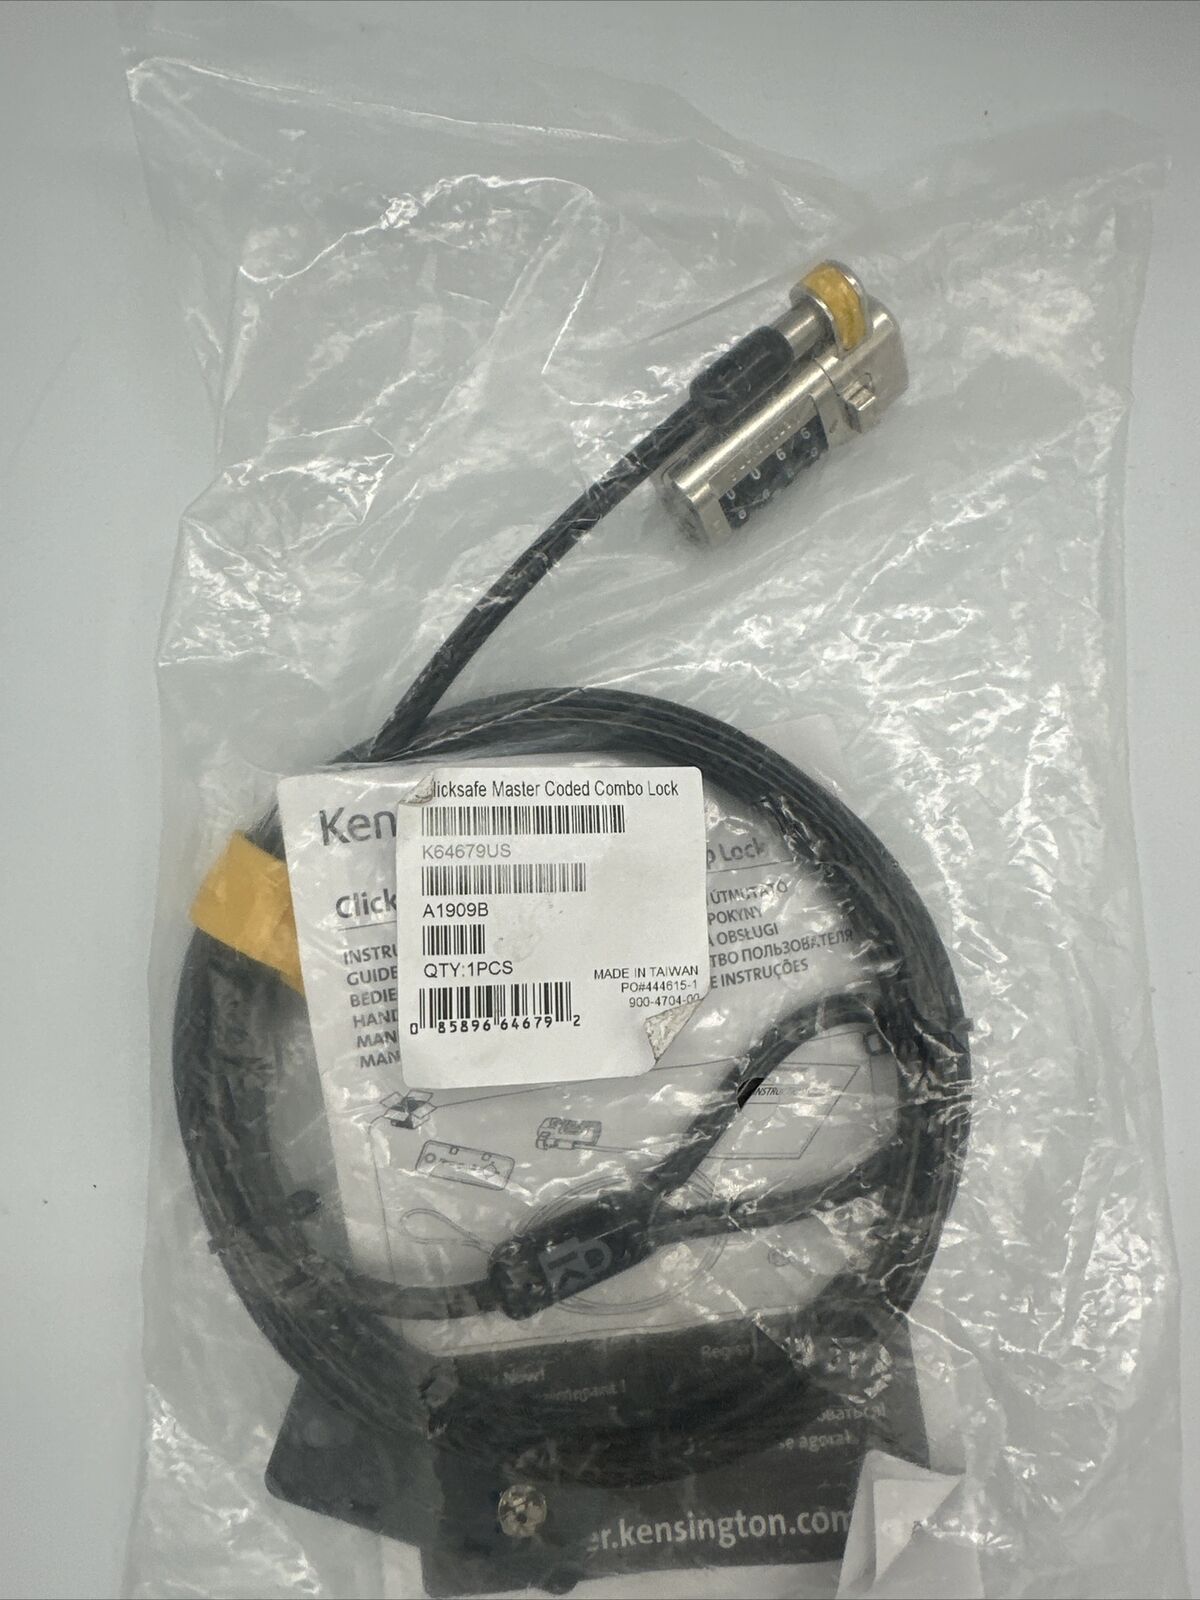 Kensington ClickSafe Master Coded Cable Lock - Combination Lock (k64679us)